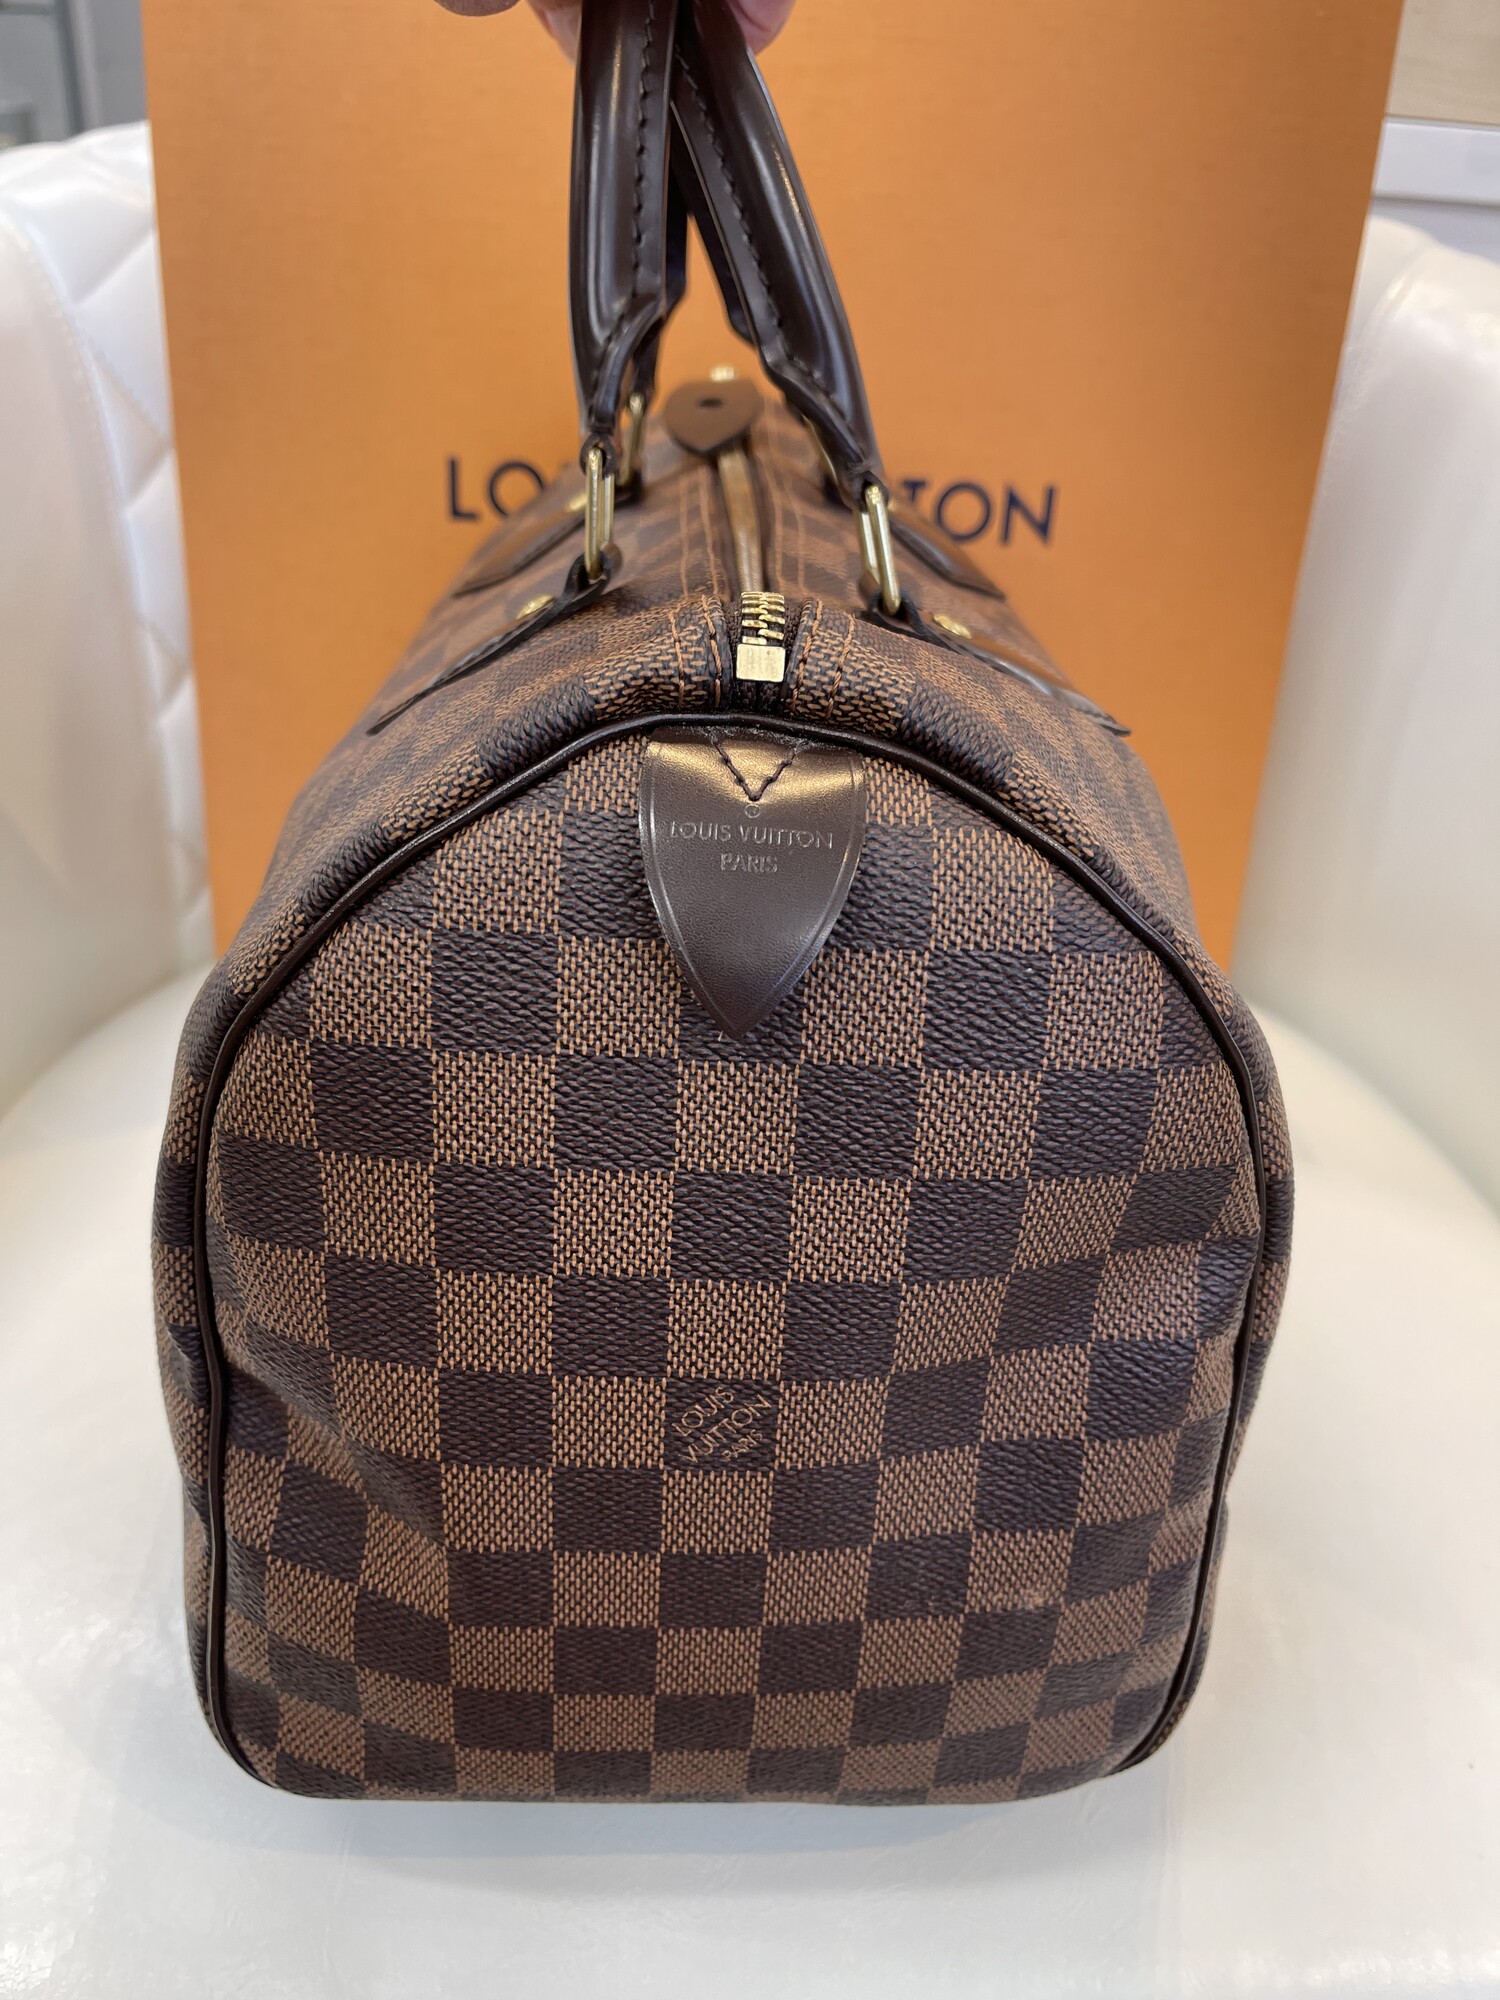 Louis Vuitton Speedy Handbag Size 30